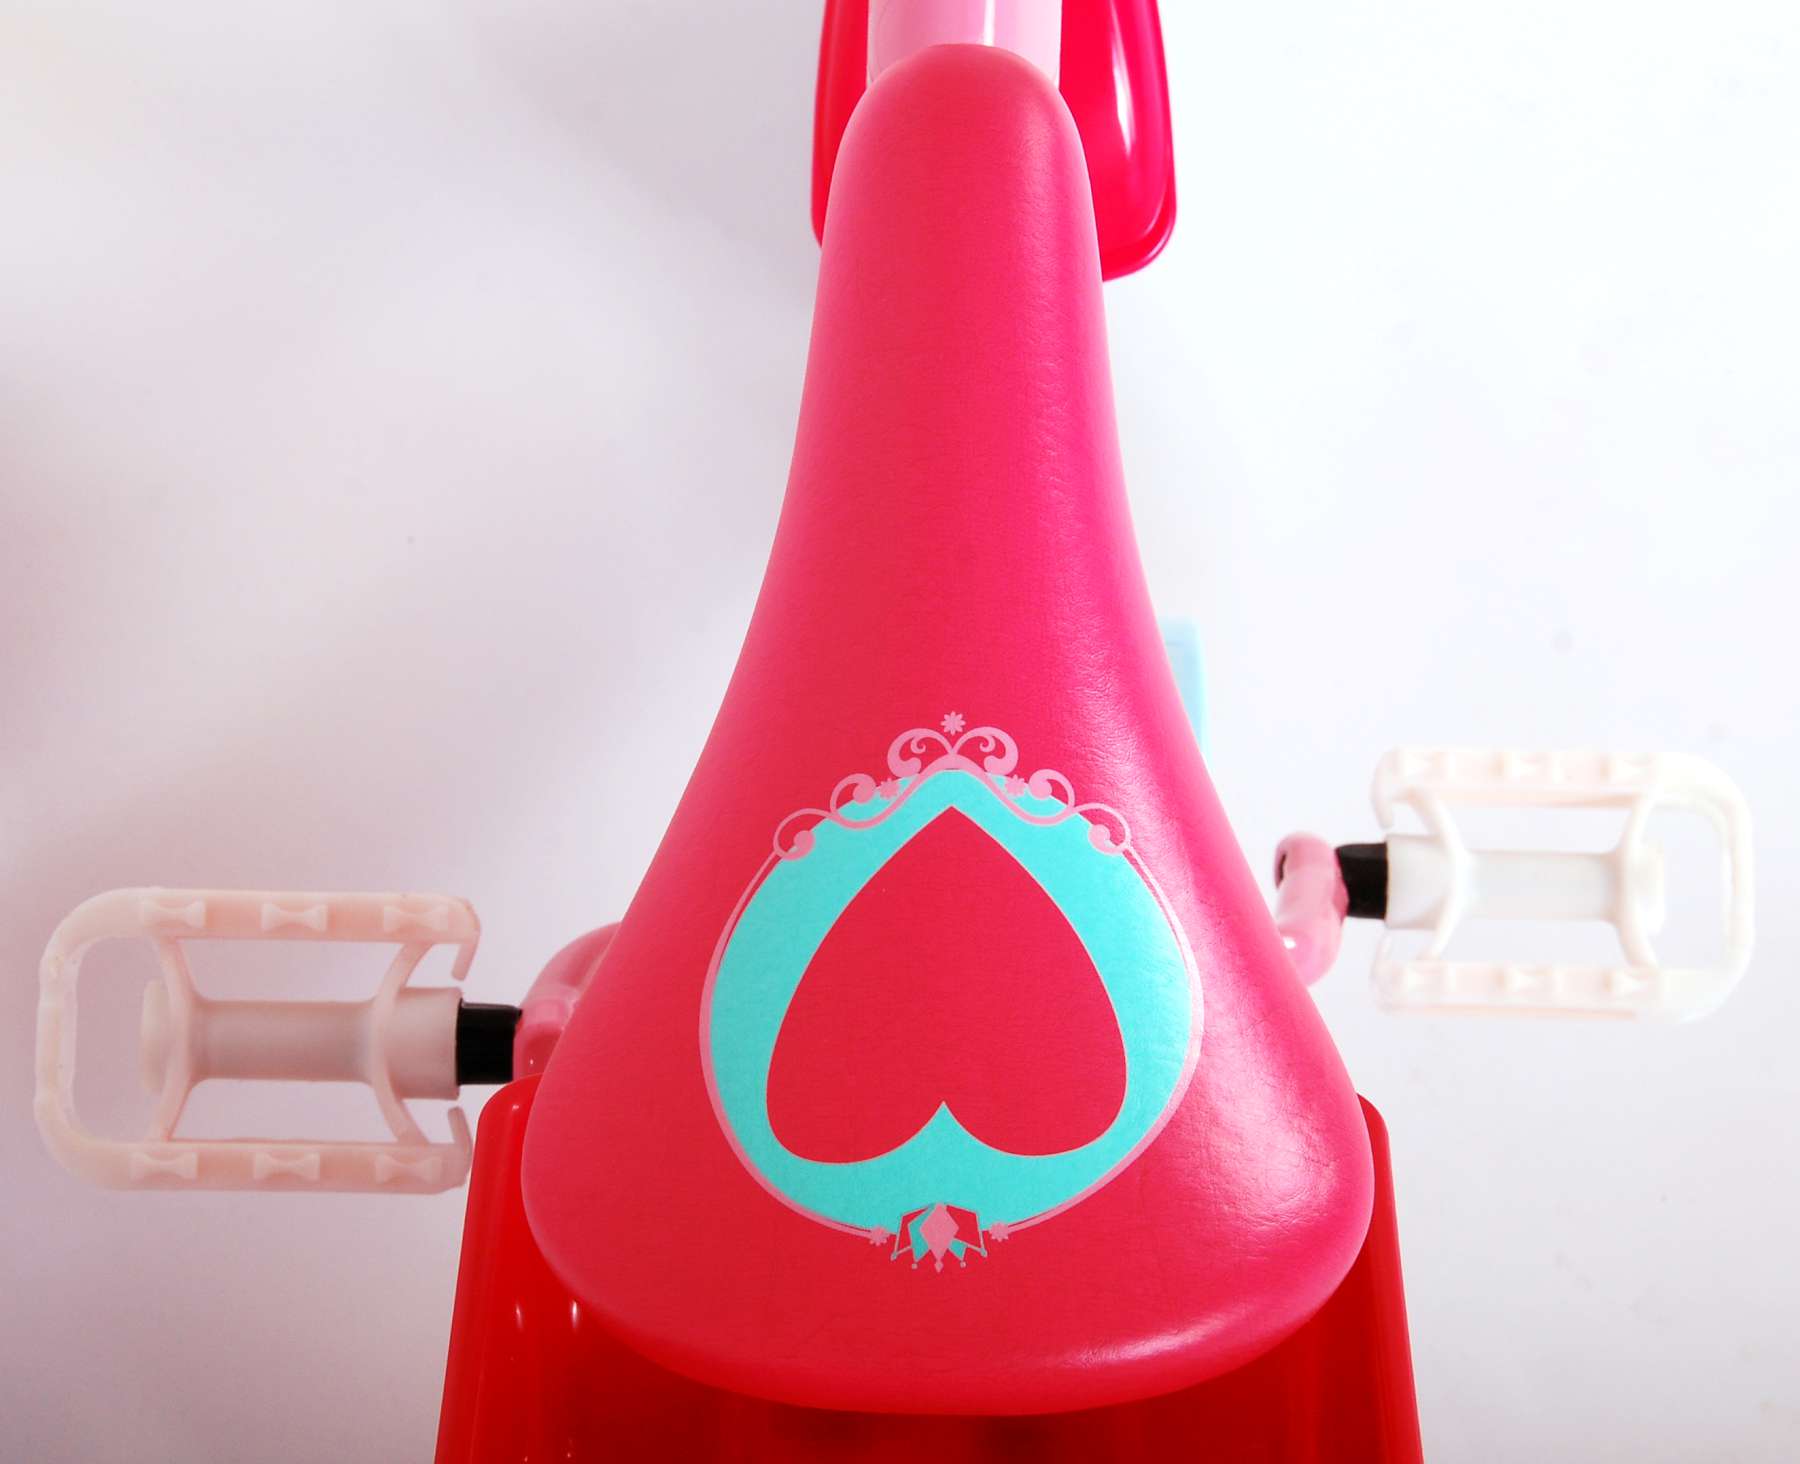 Kinderfahrrad Disney Princess für Mädchen 12 Zoll Kinderrad in Rosa